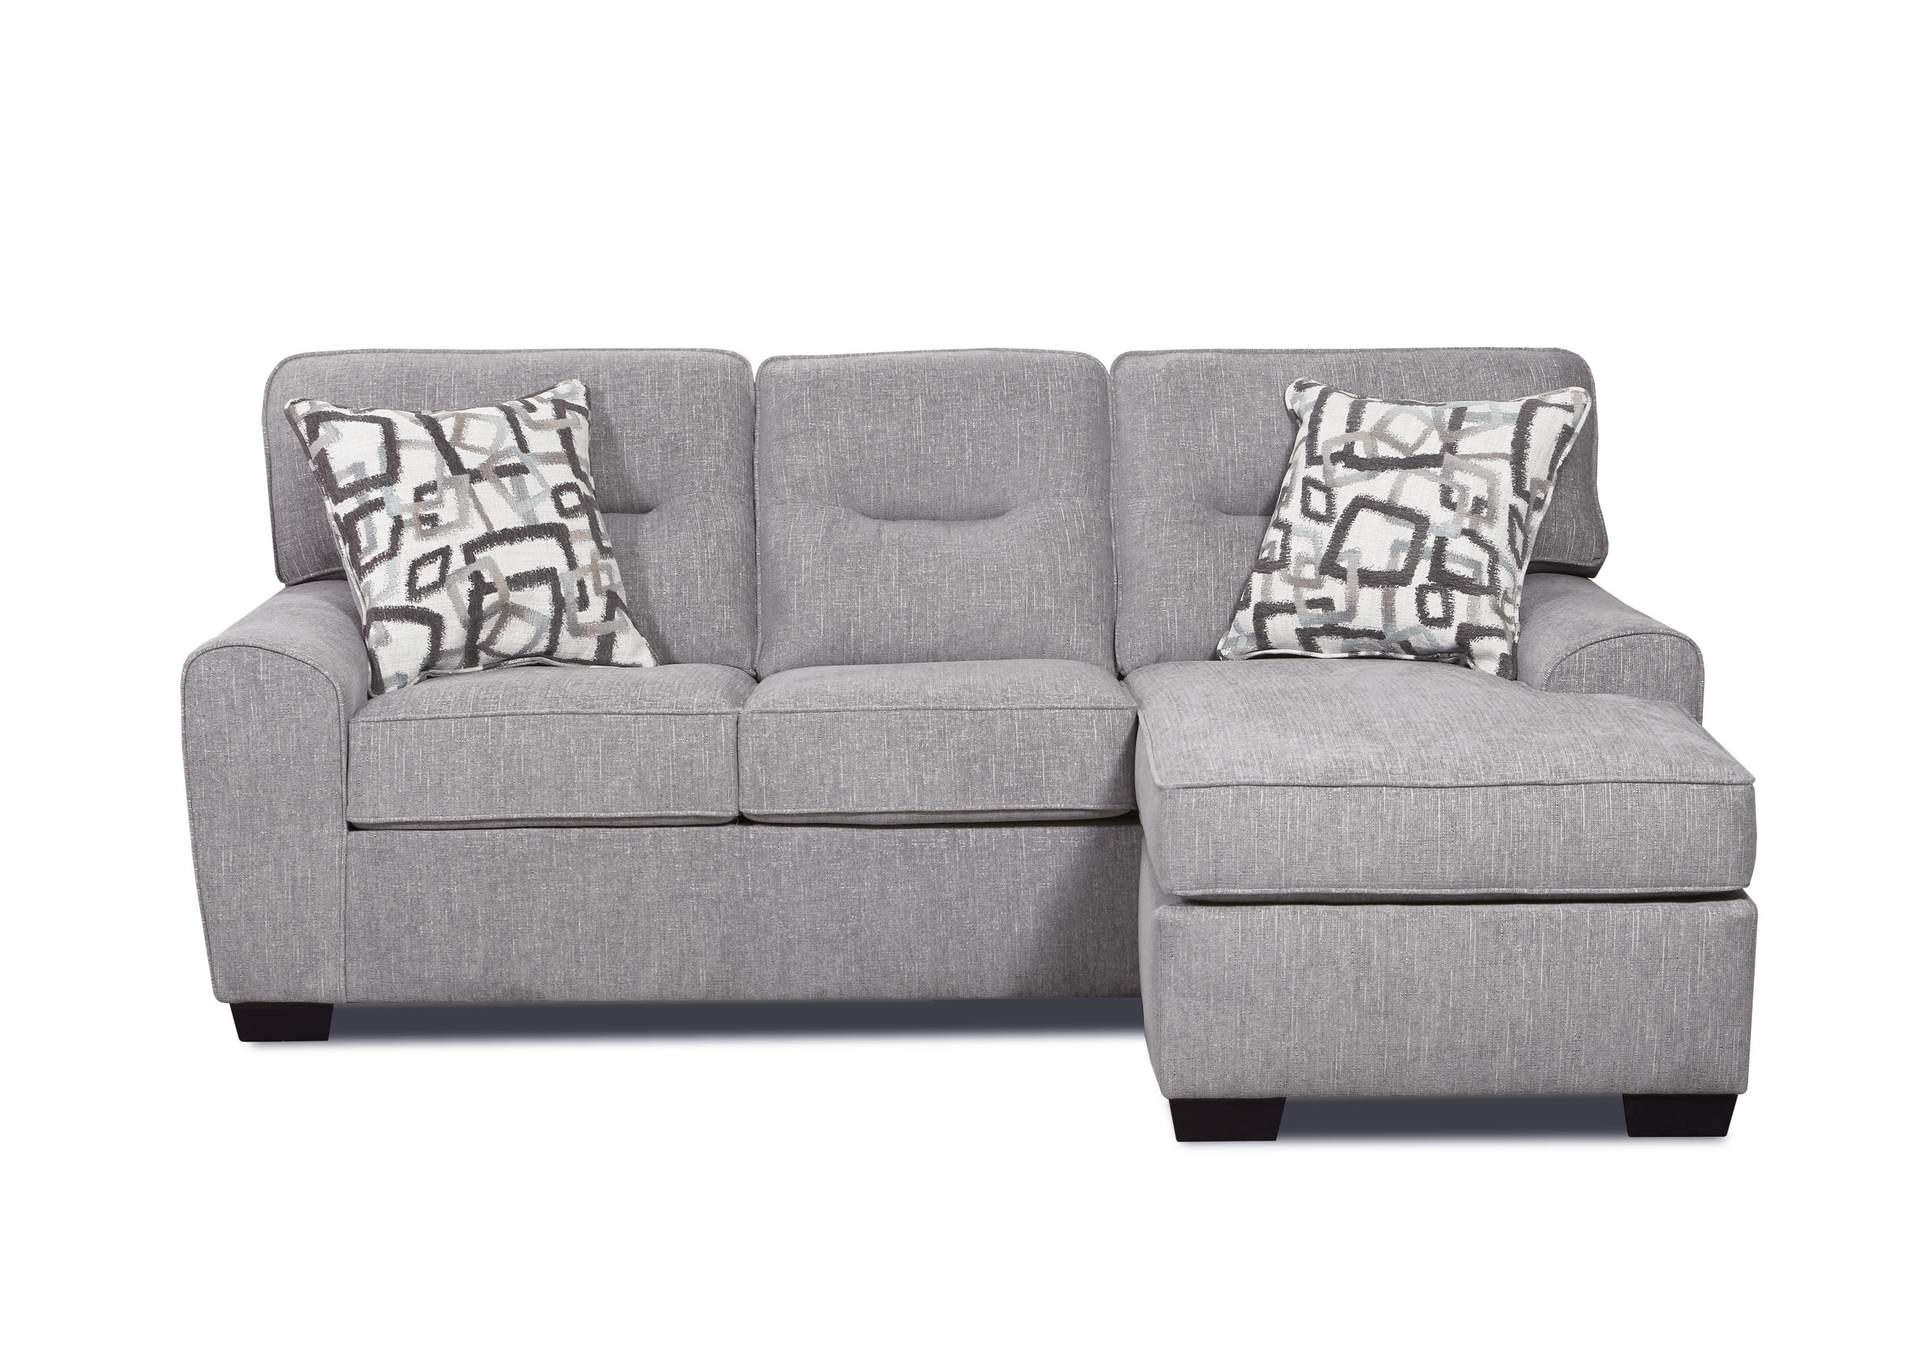 Sofa/Chaise - Seneca Marble / Digital Seafoam,Lane Furniture